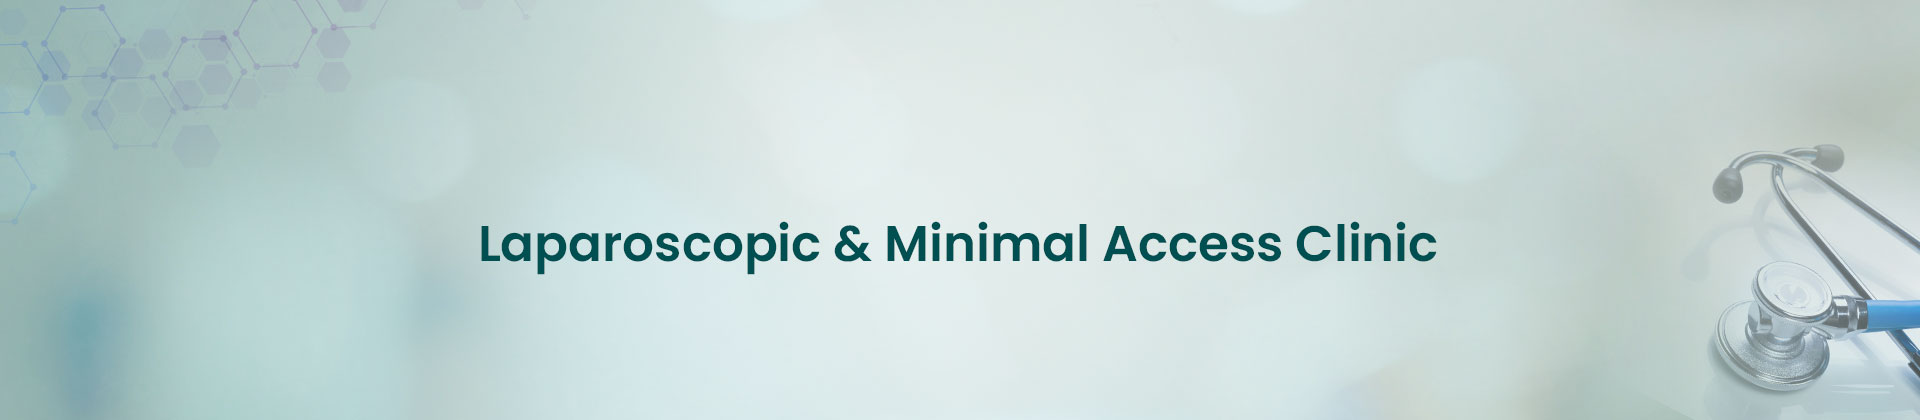 Laparoscopic & Minimal Access Clinic